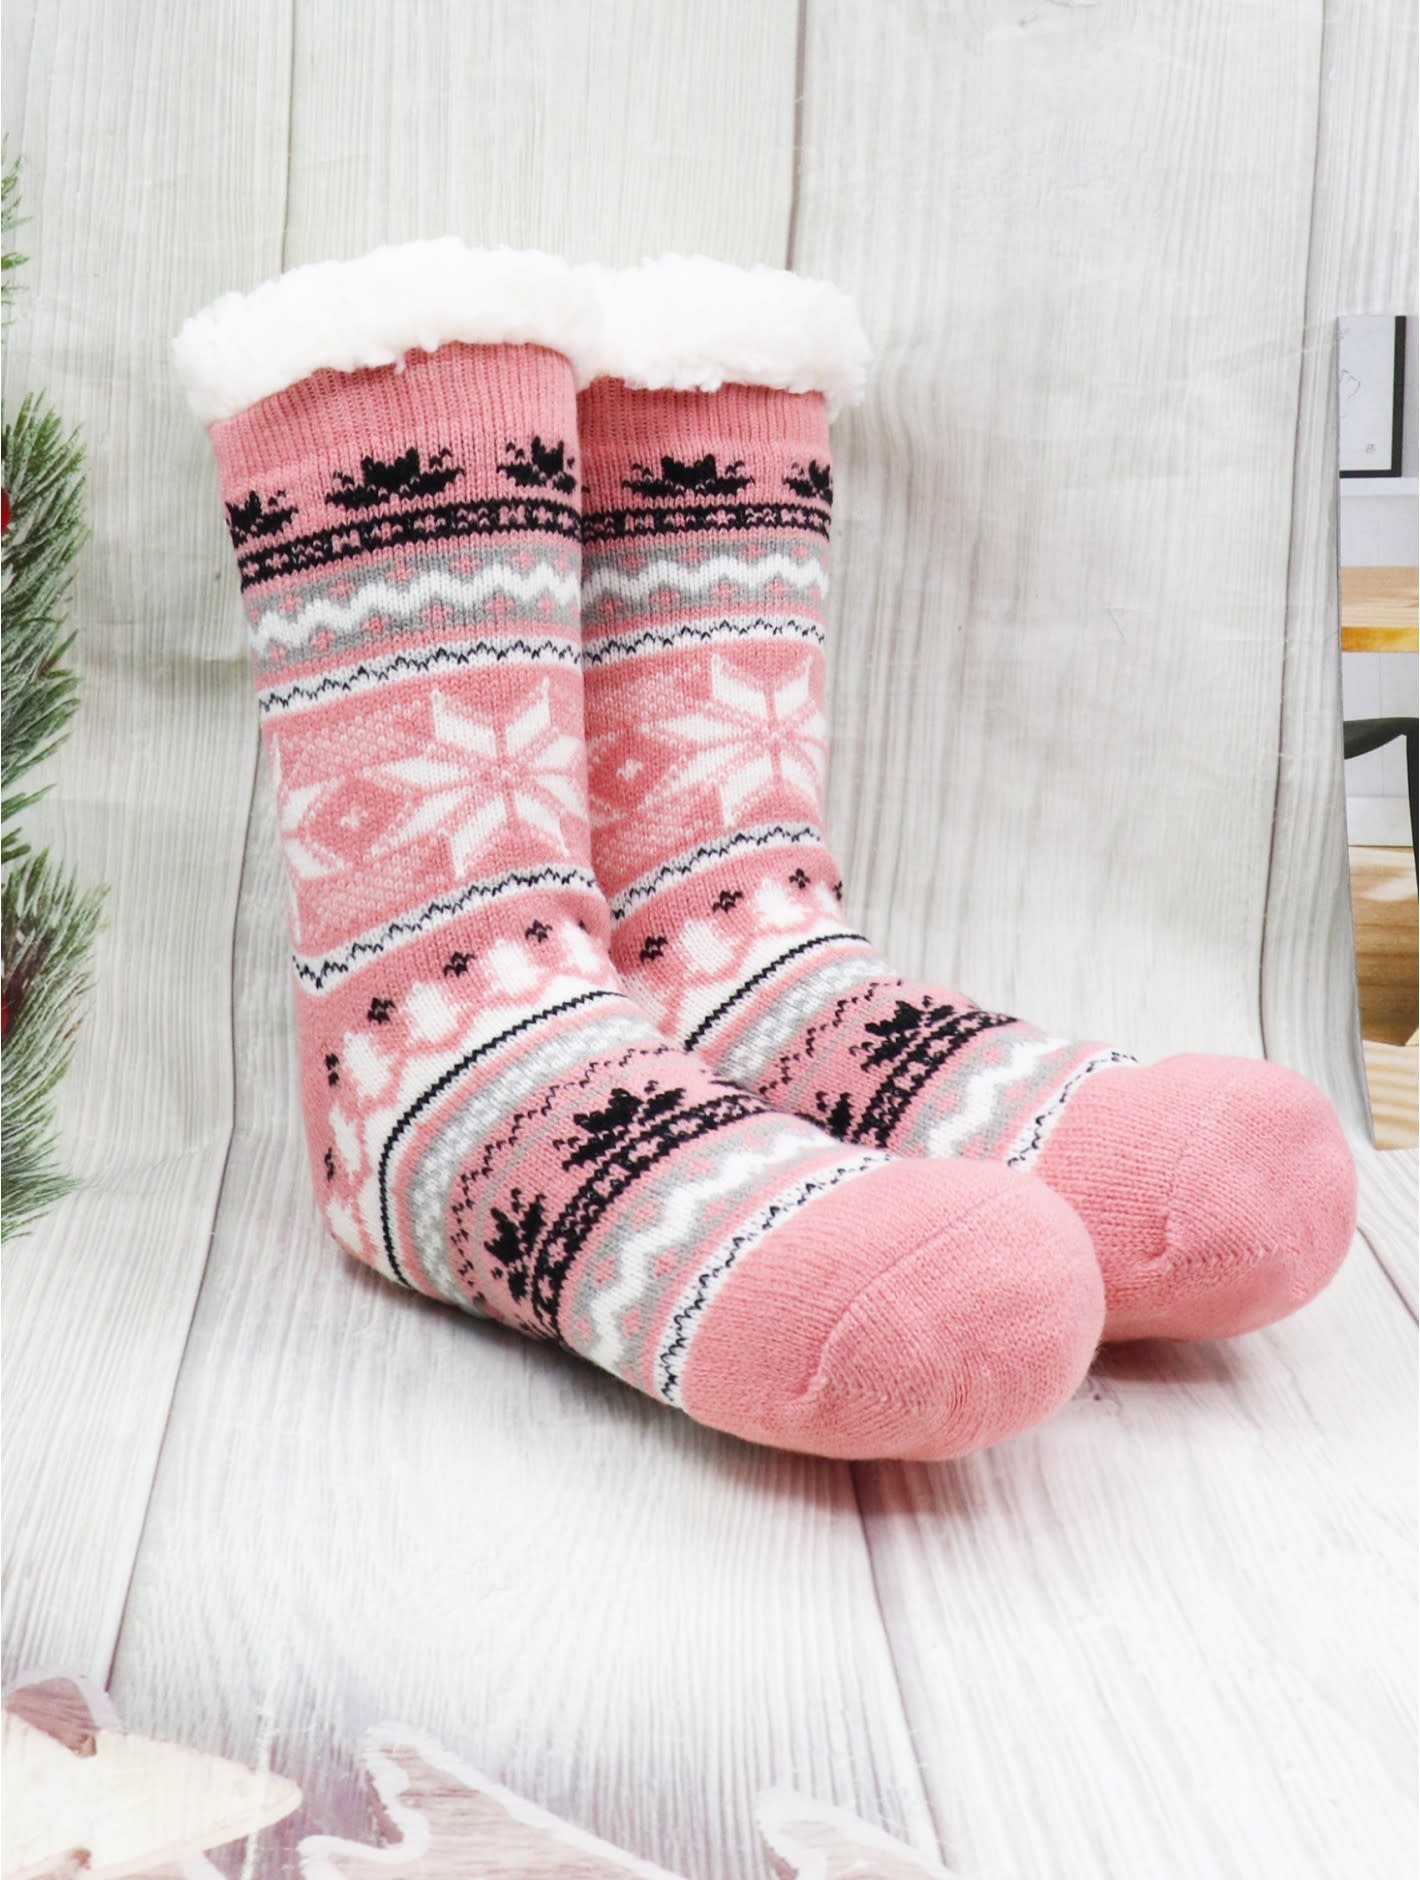 Women's Anti-Skid Socks,Cozy Fuzzy Fleece-Lined Warm Socks with Silicone  Grippers,Christmas Socks，Pink 